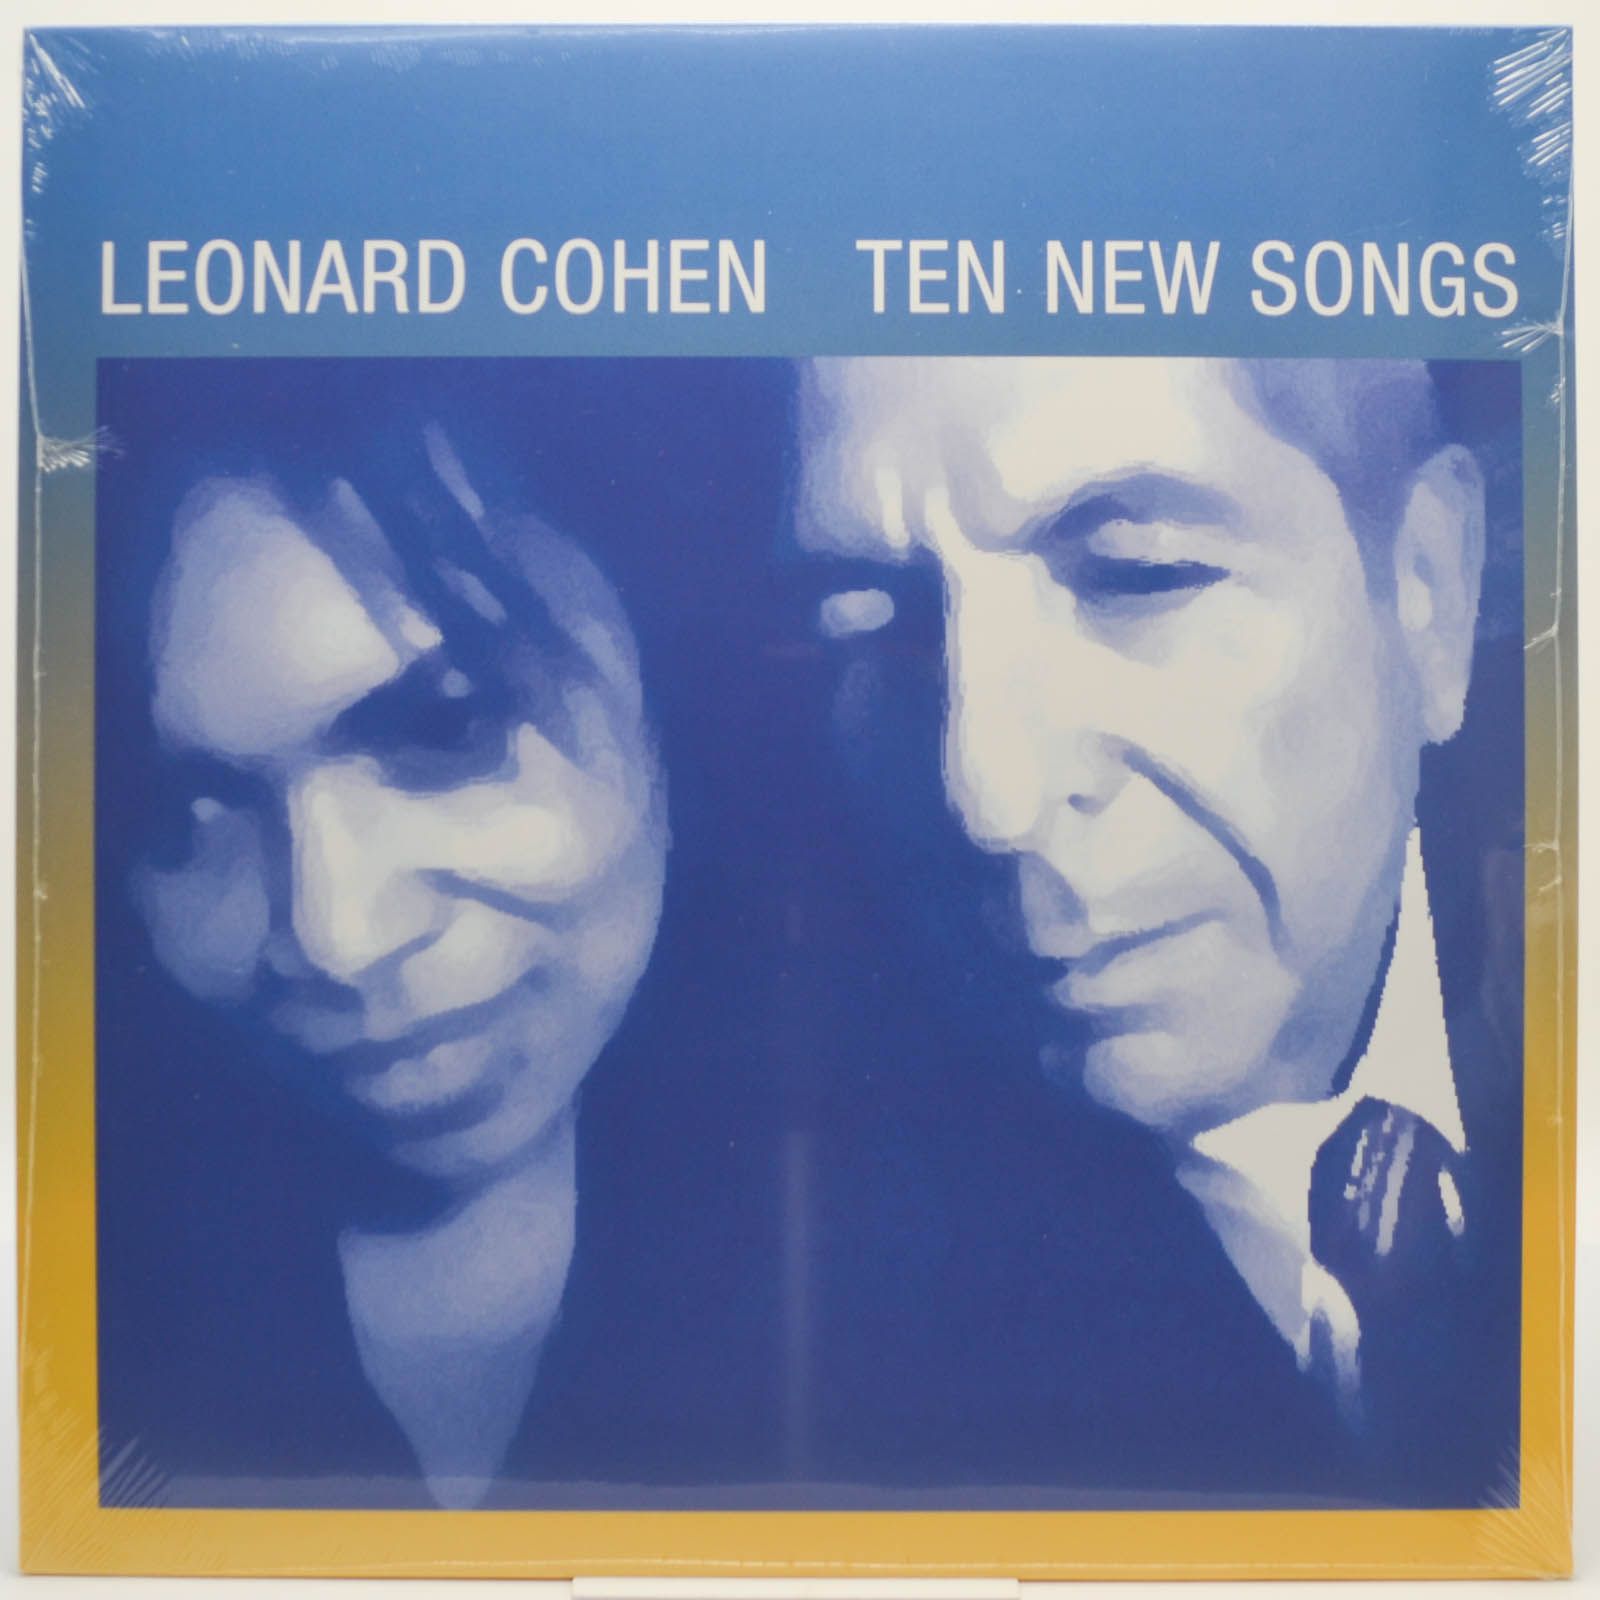 Leonard Cohen — Ten New Songs, 2001